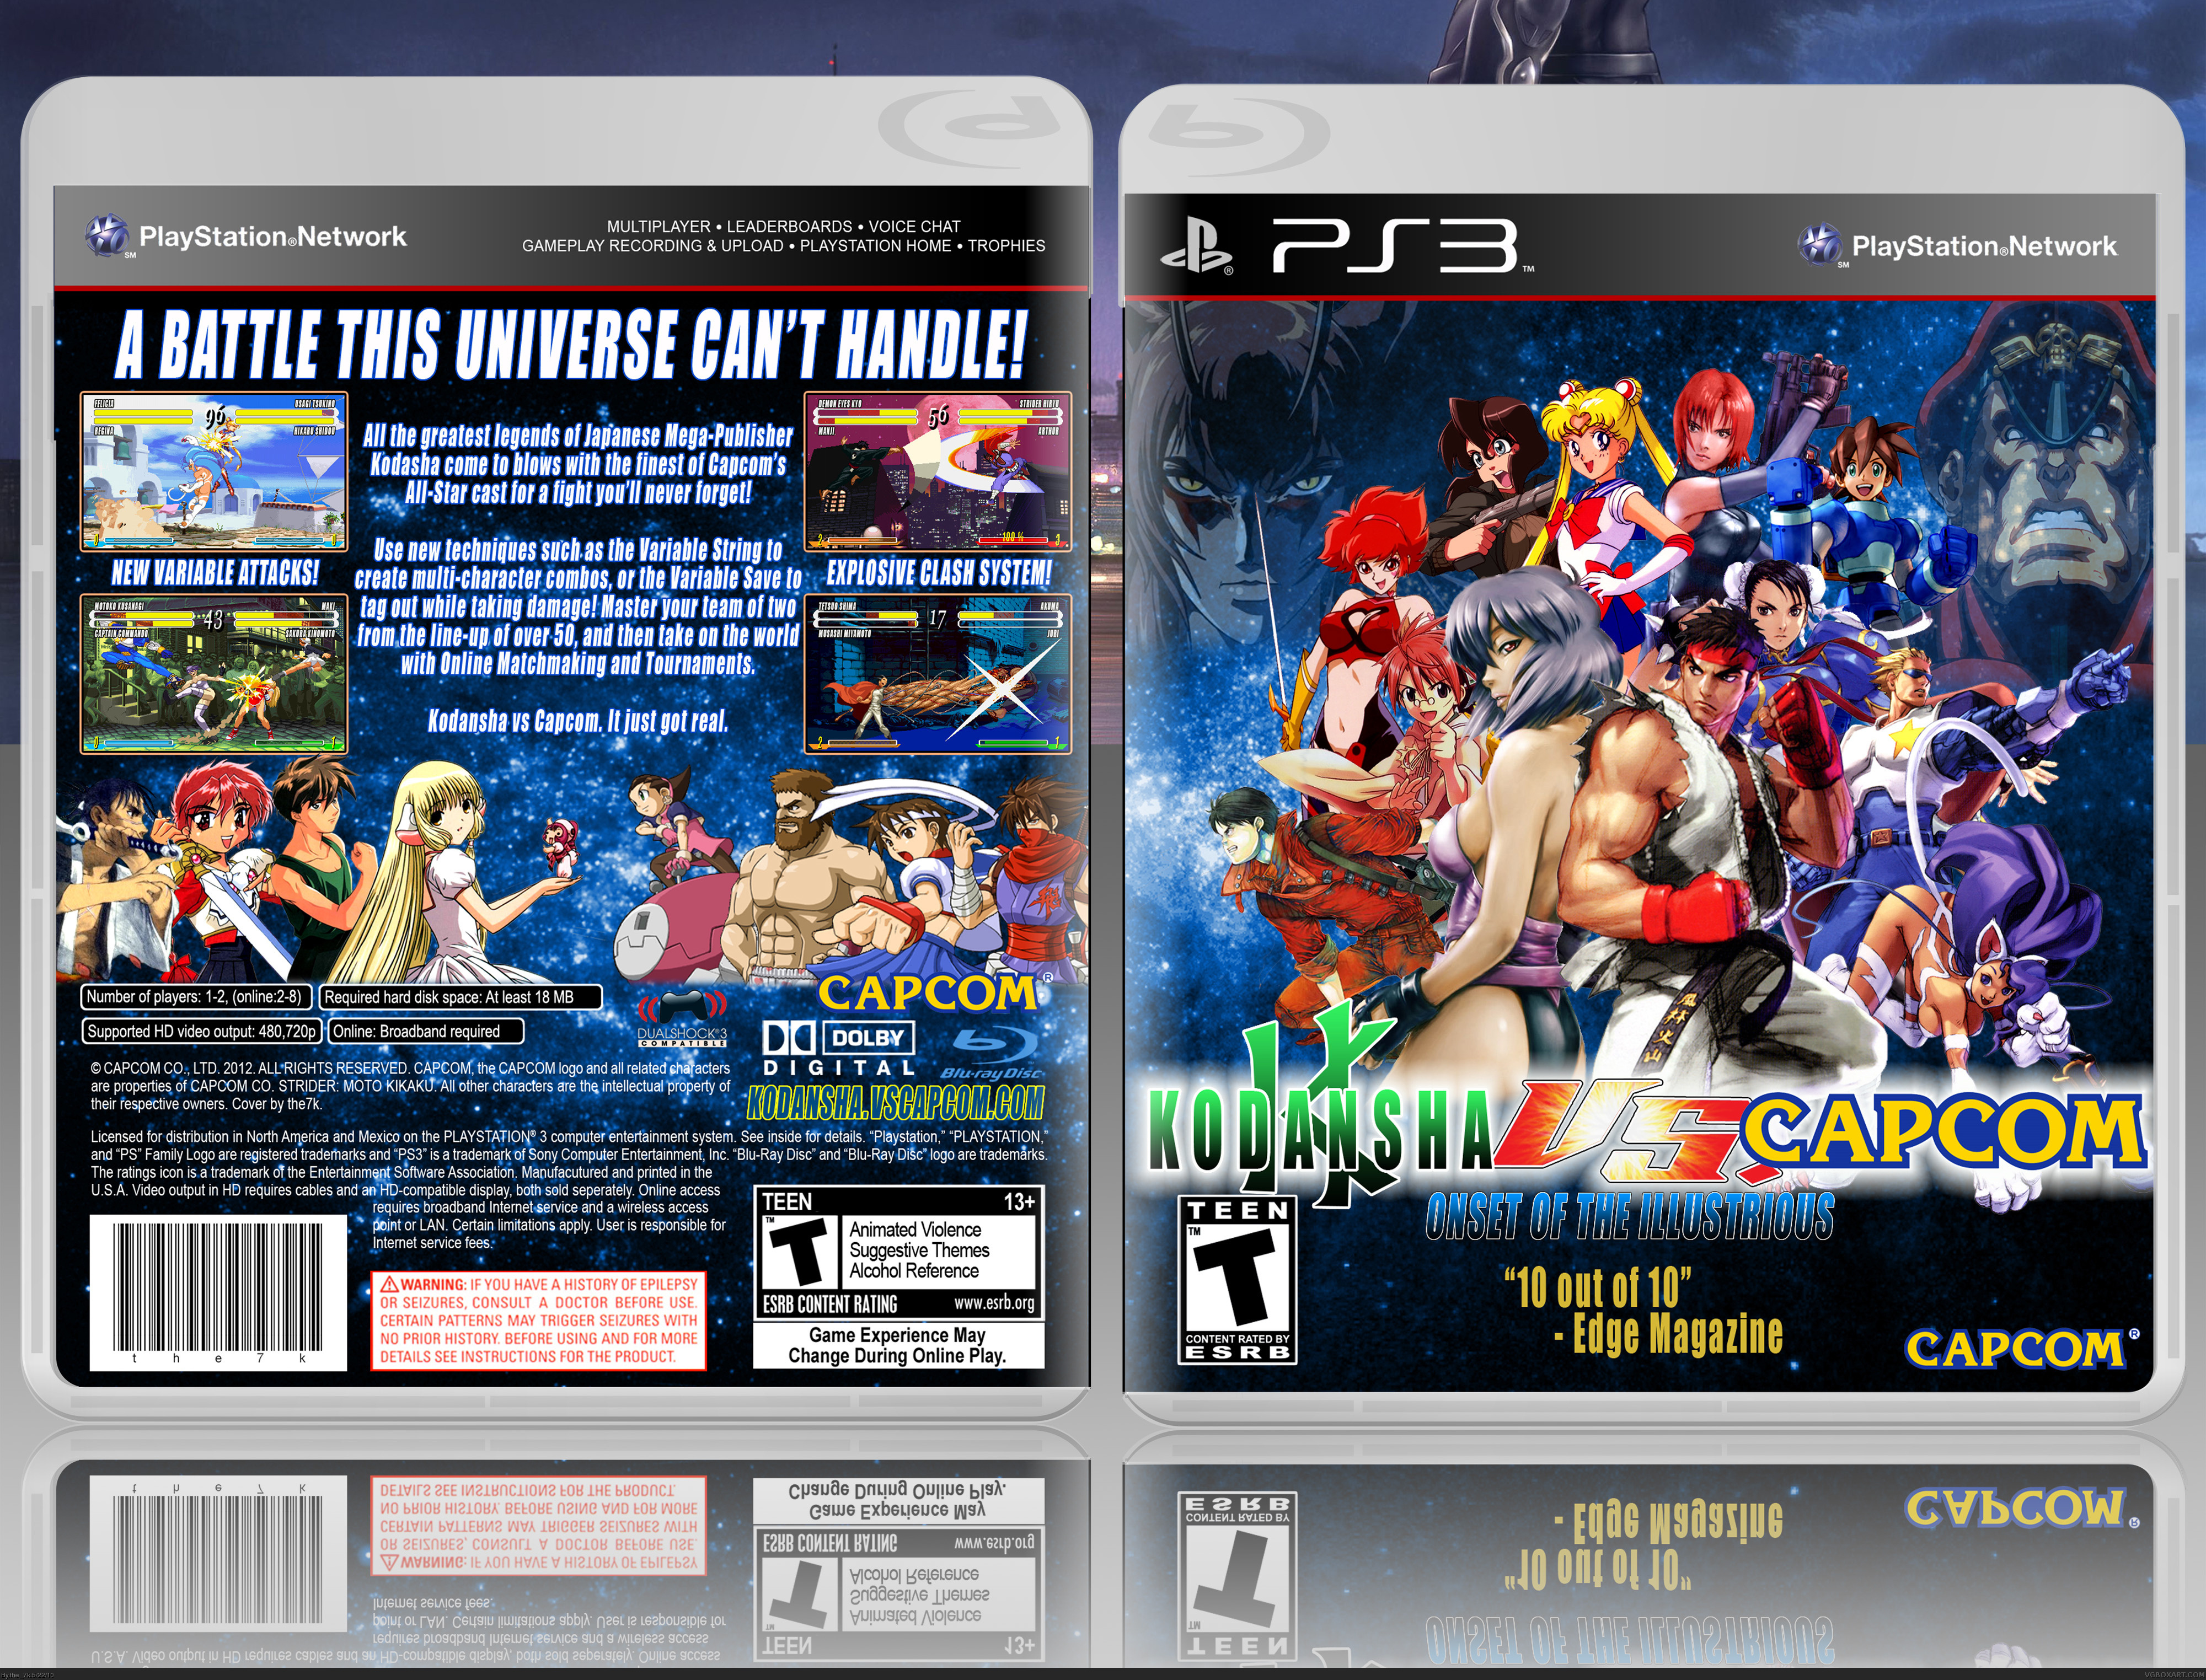 Kodansha vs Capcom box cover